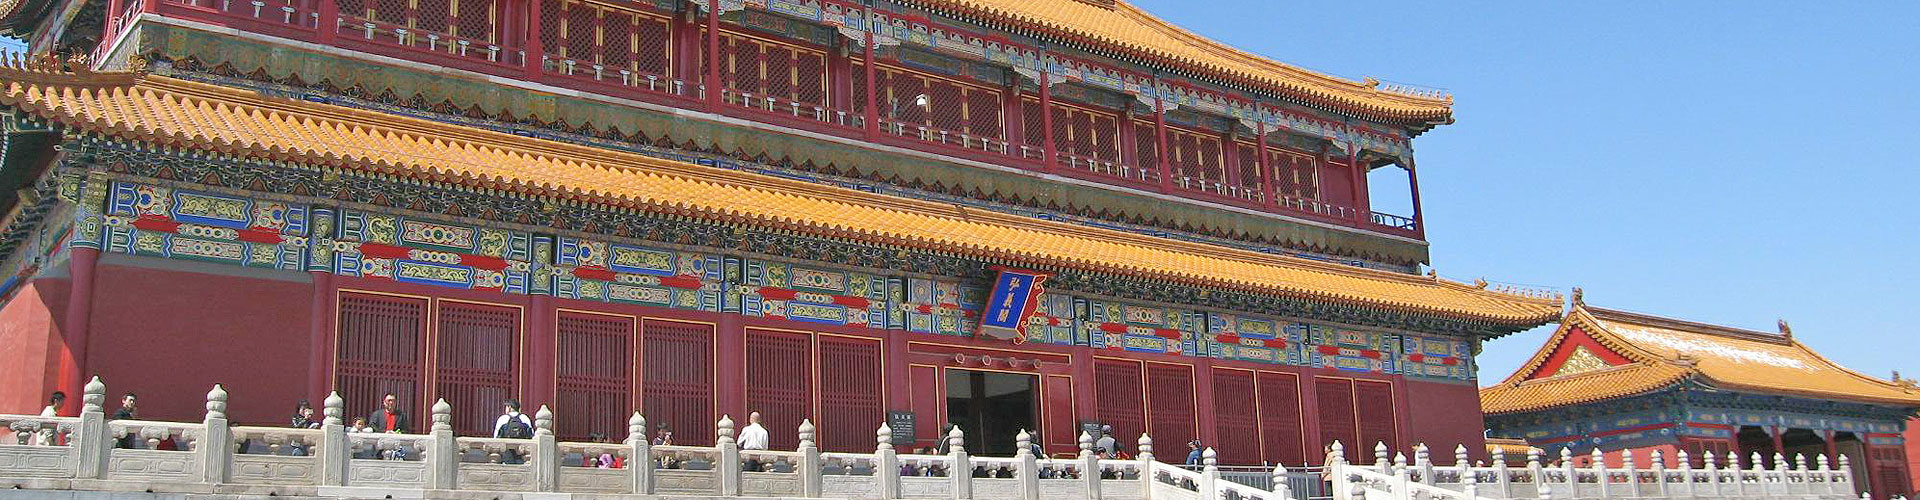 Architectures in Forbidden City